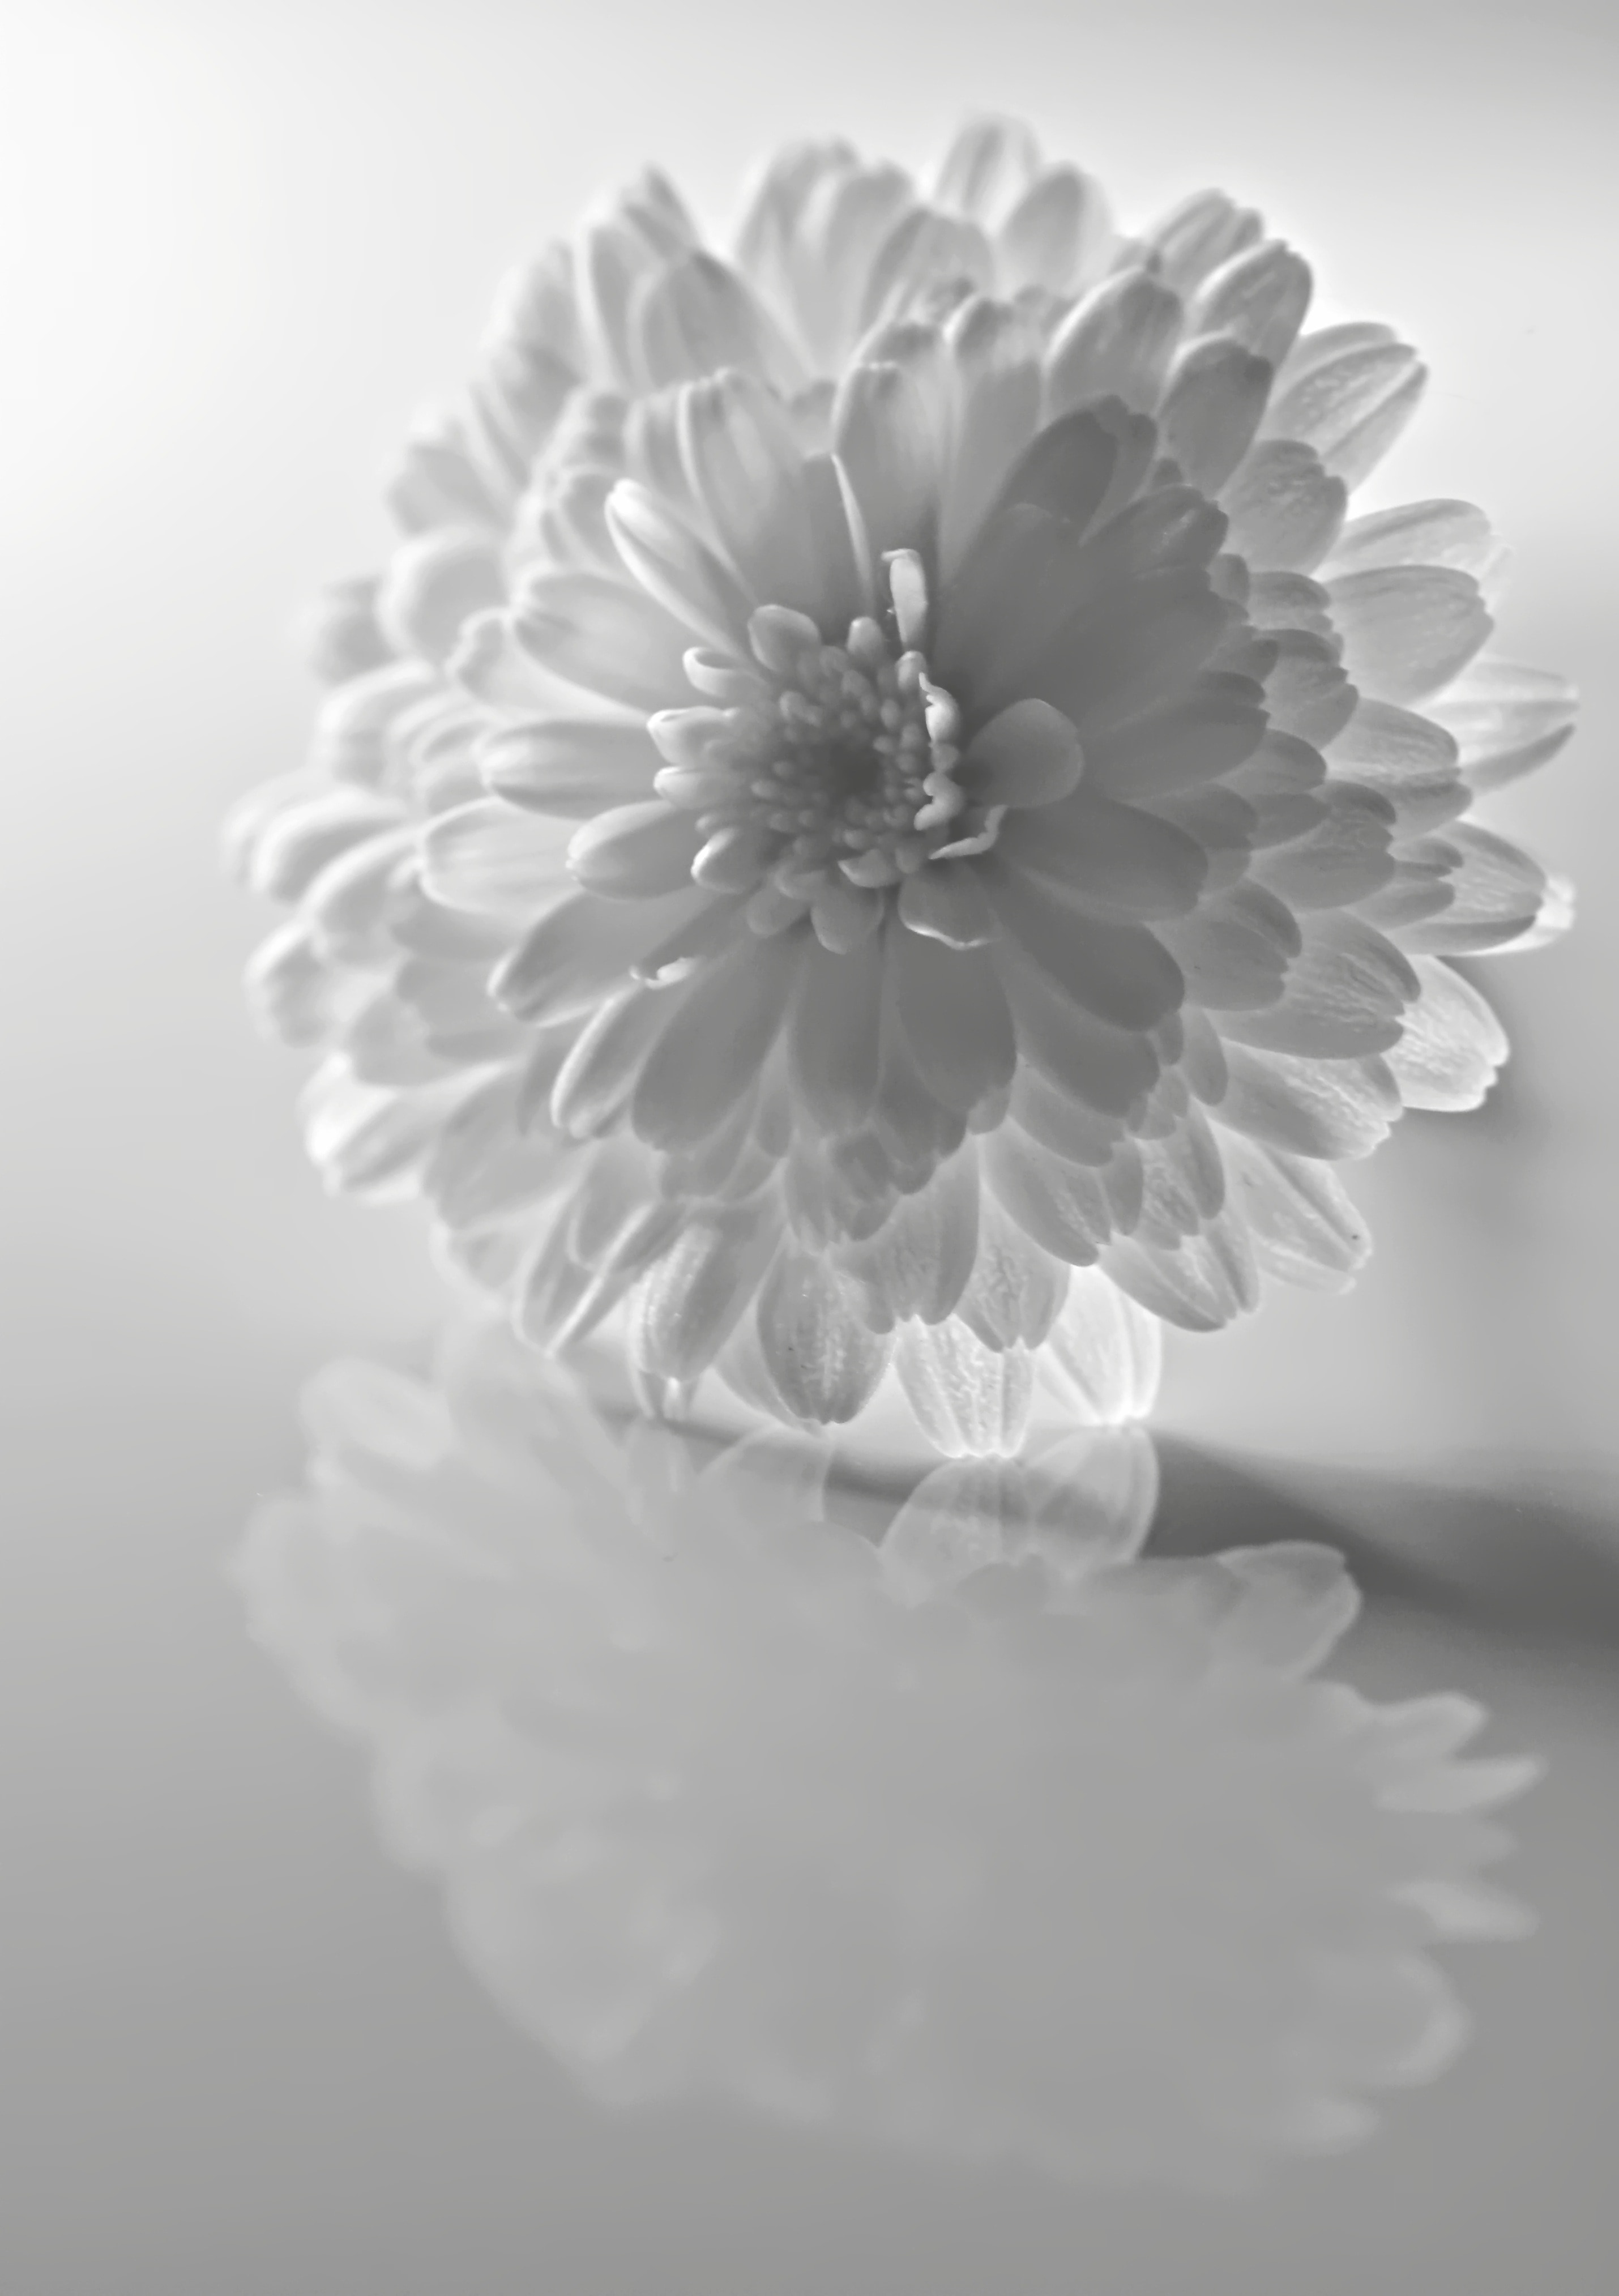 Blooms, Flower, Black And White, Shadows, flower, studio shot